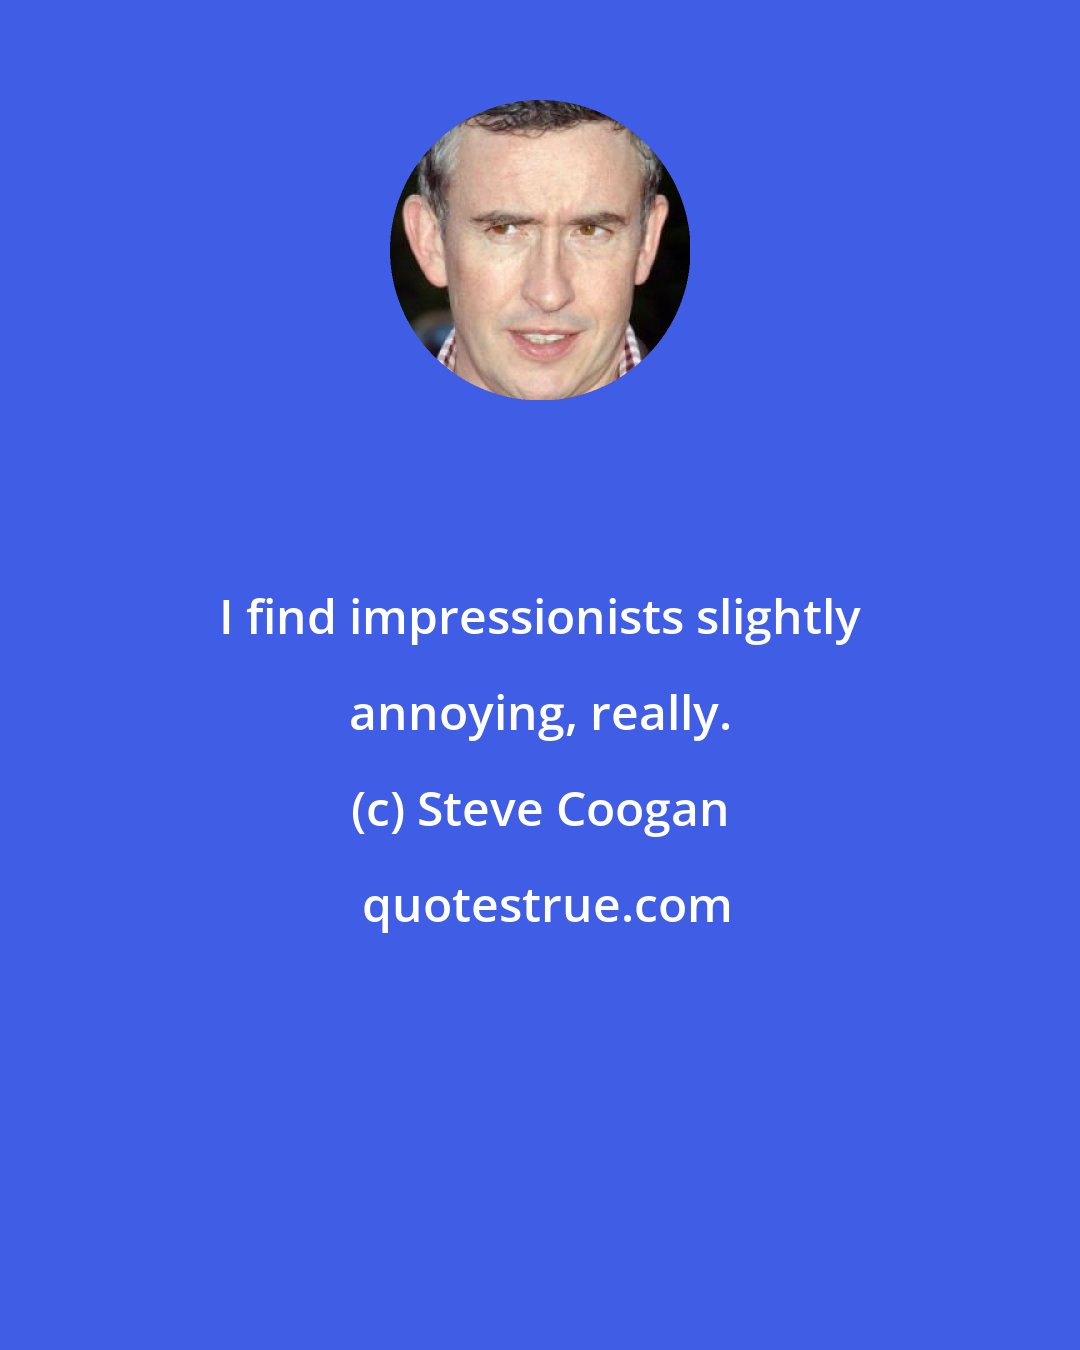 Steve Coogan: I find impressionists slightly annoying, really.